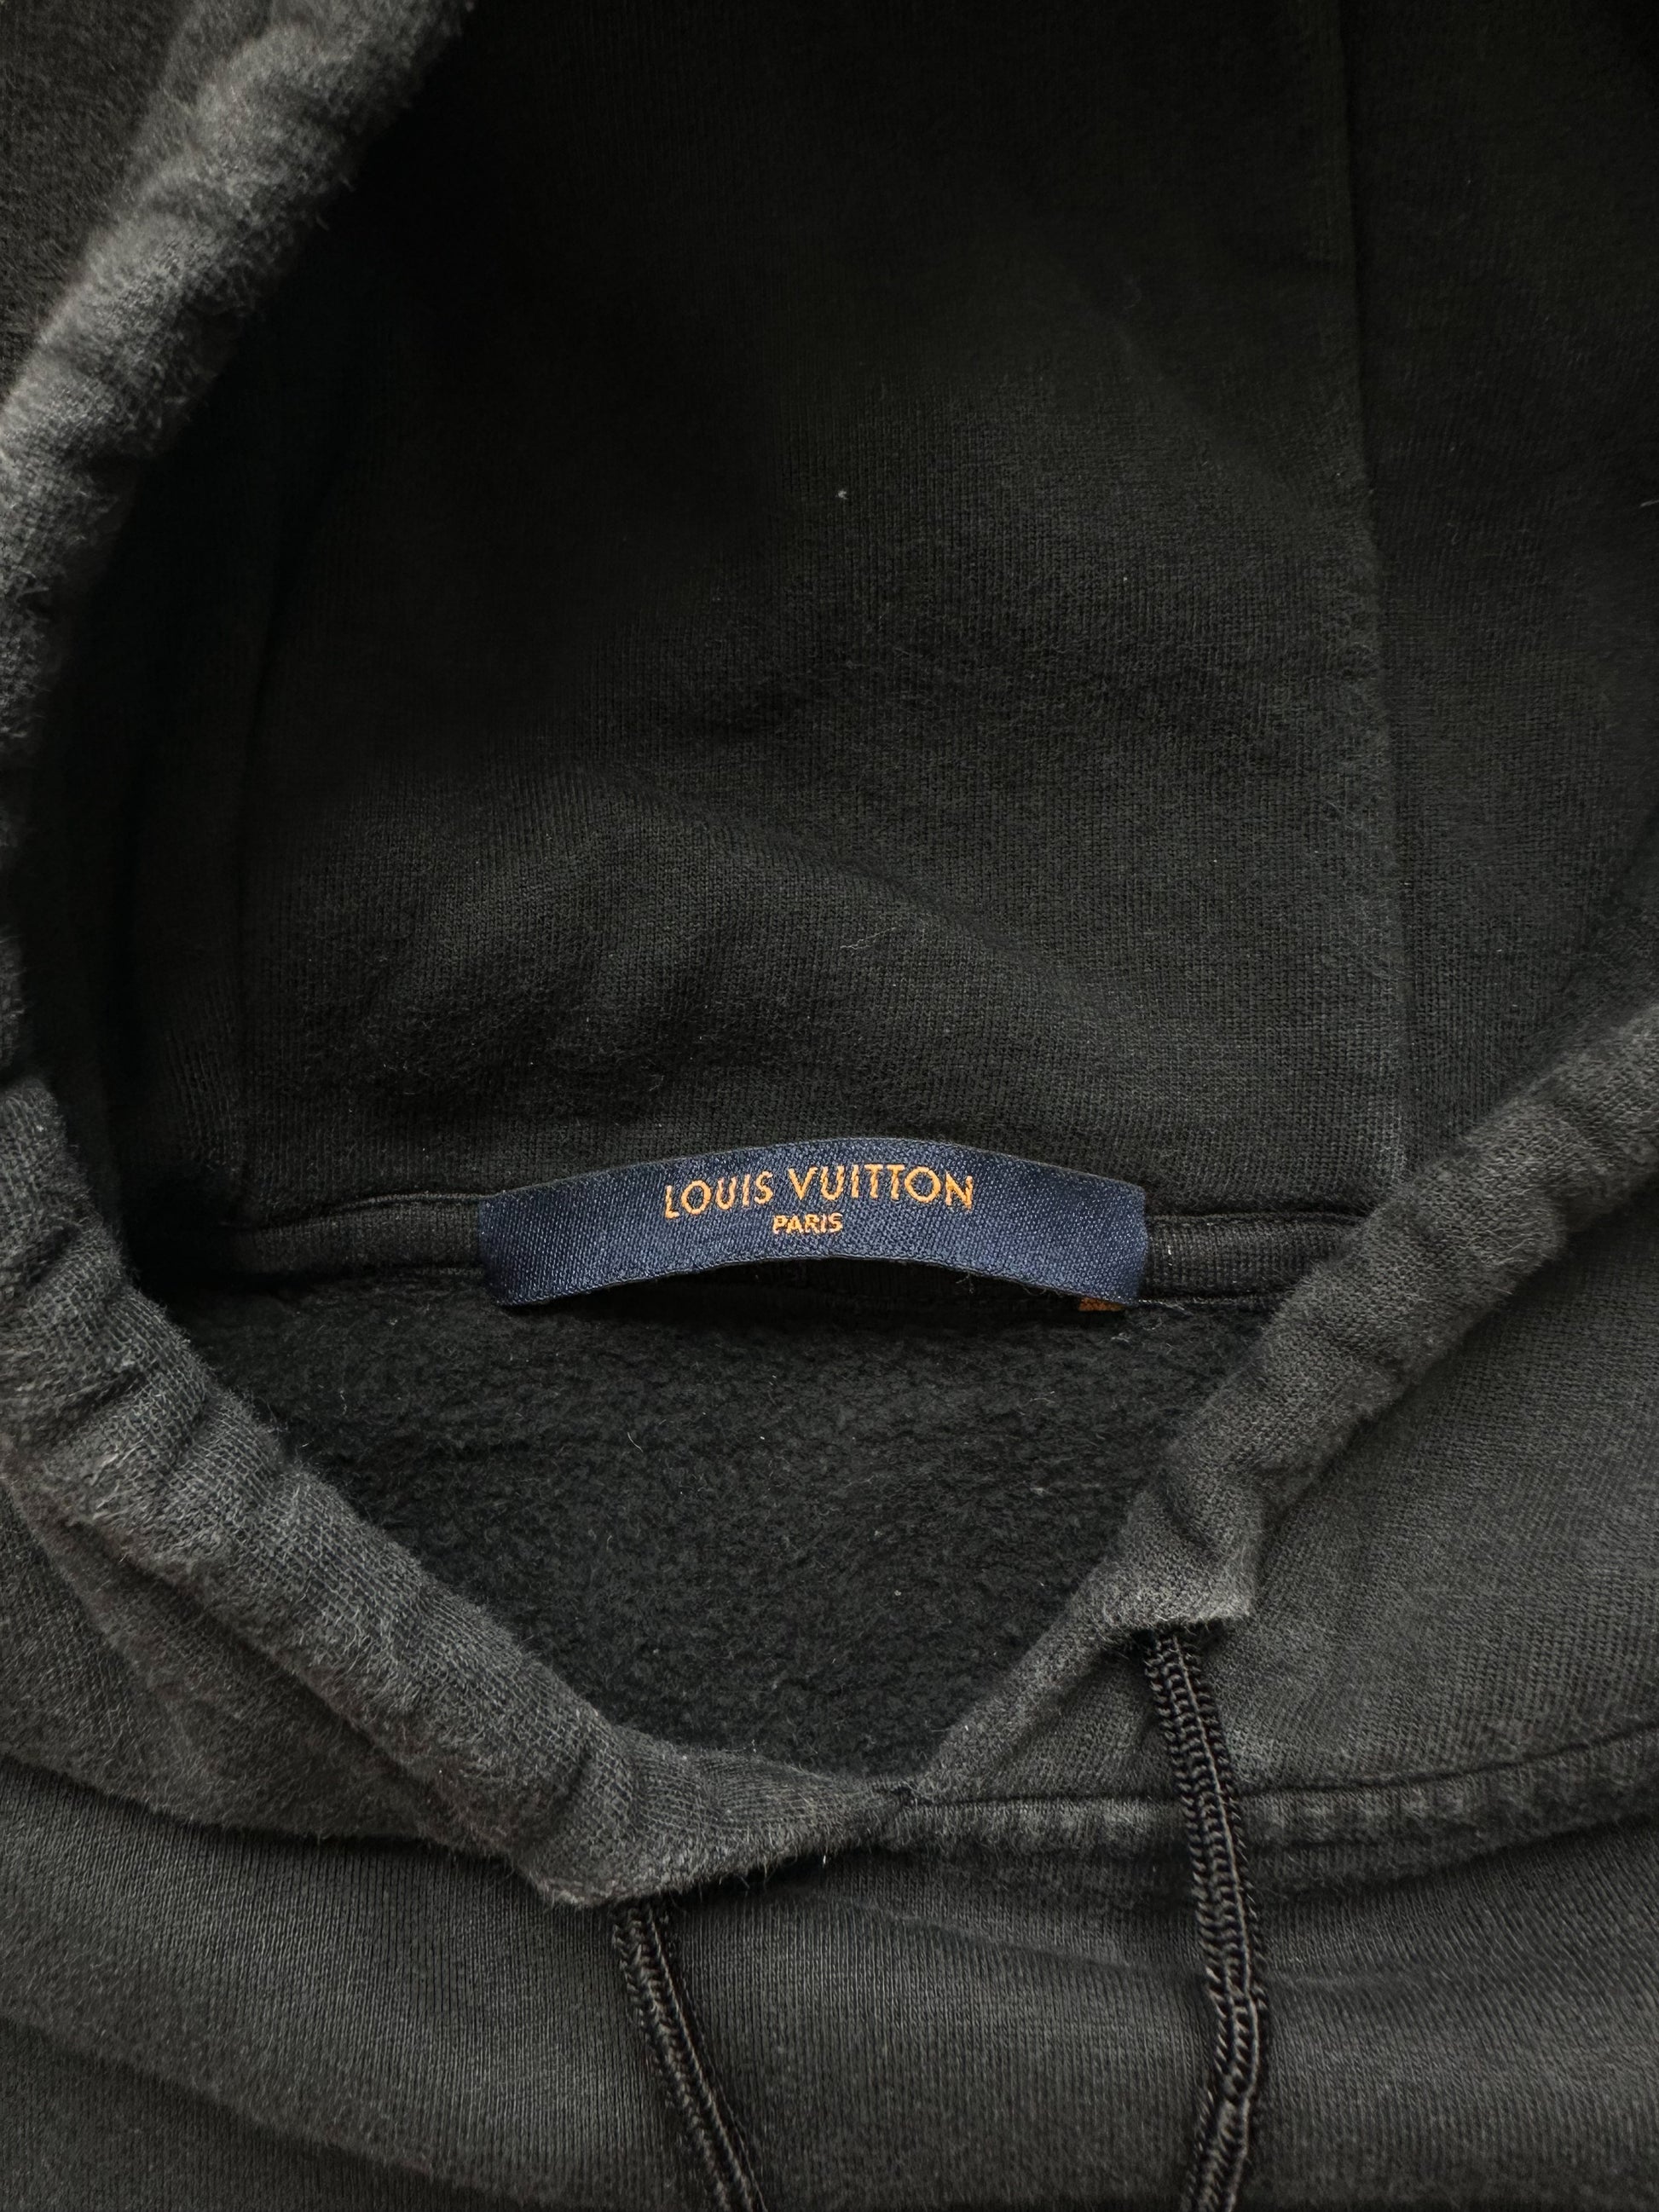 Louis Vuitton Hoodies & Sweatshirts for Men for Sale